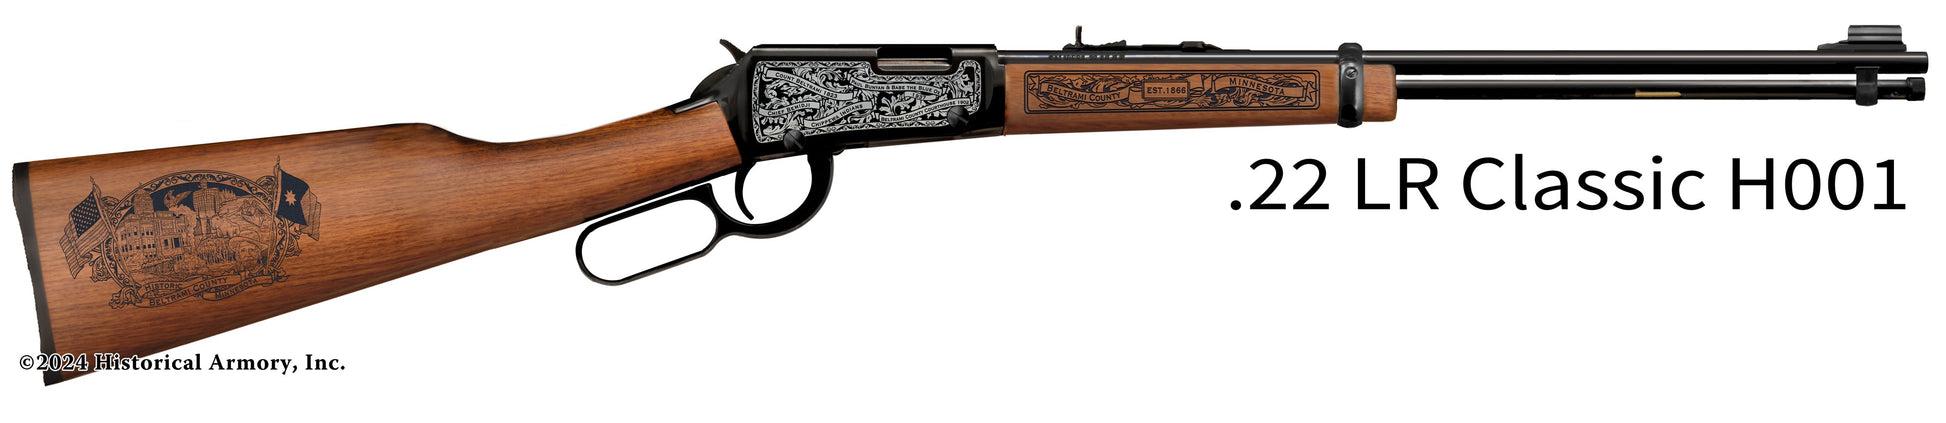 Beltrami County Minnesota Engraved Henry H001 Rifle